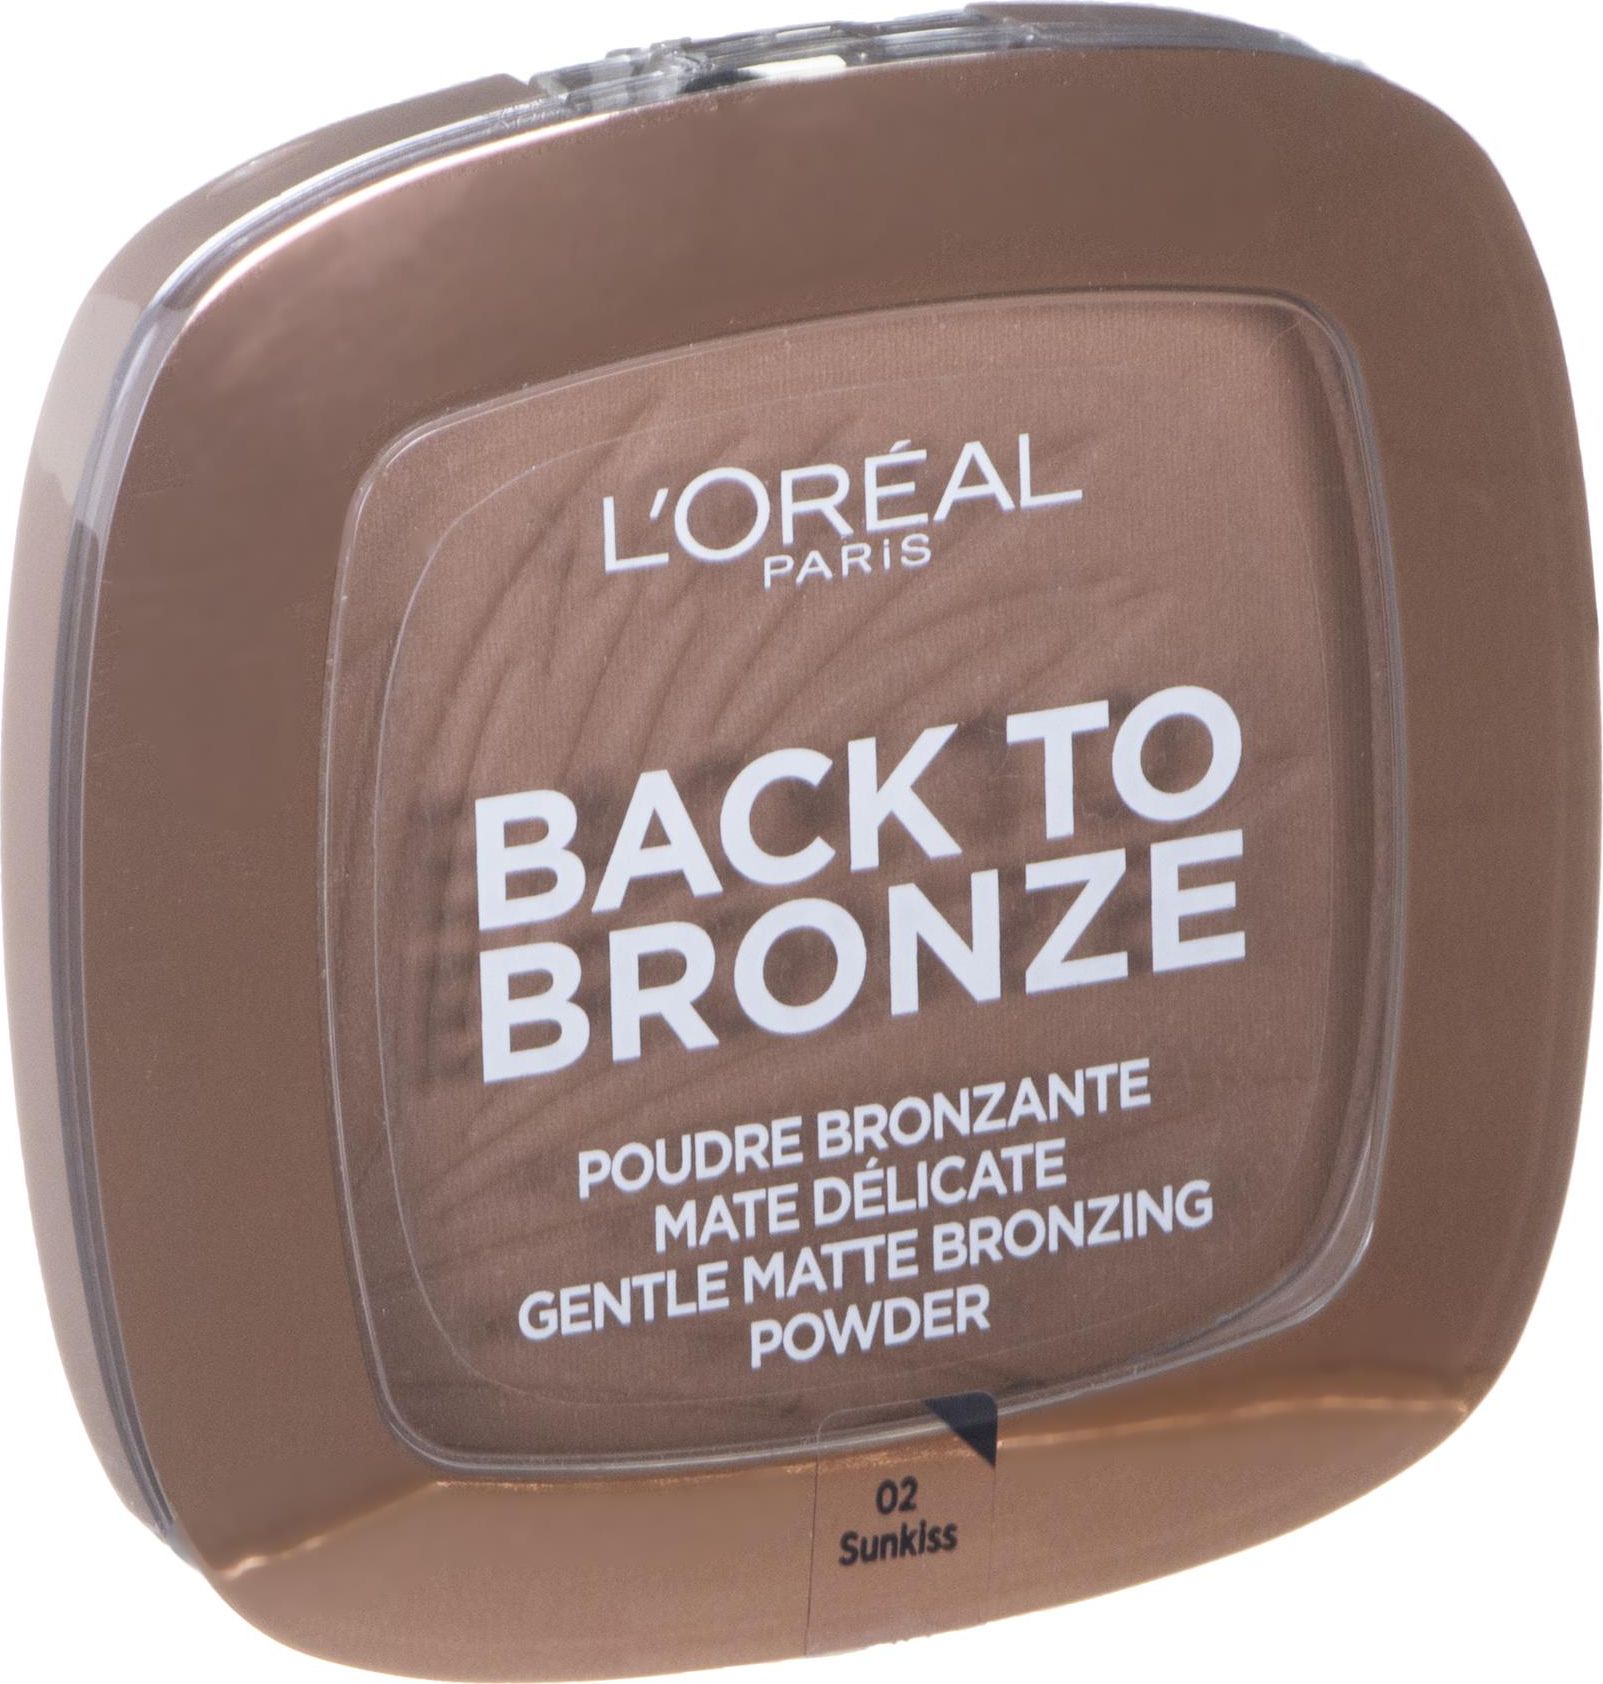 L'Oreal Paris Back To Bronze Gentle Matte Bronzing Powder 02 Sunkiss 9g kosmētika ķermenim